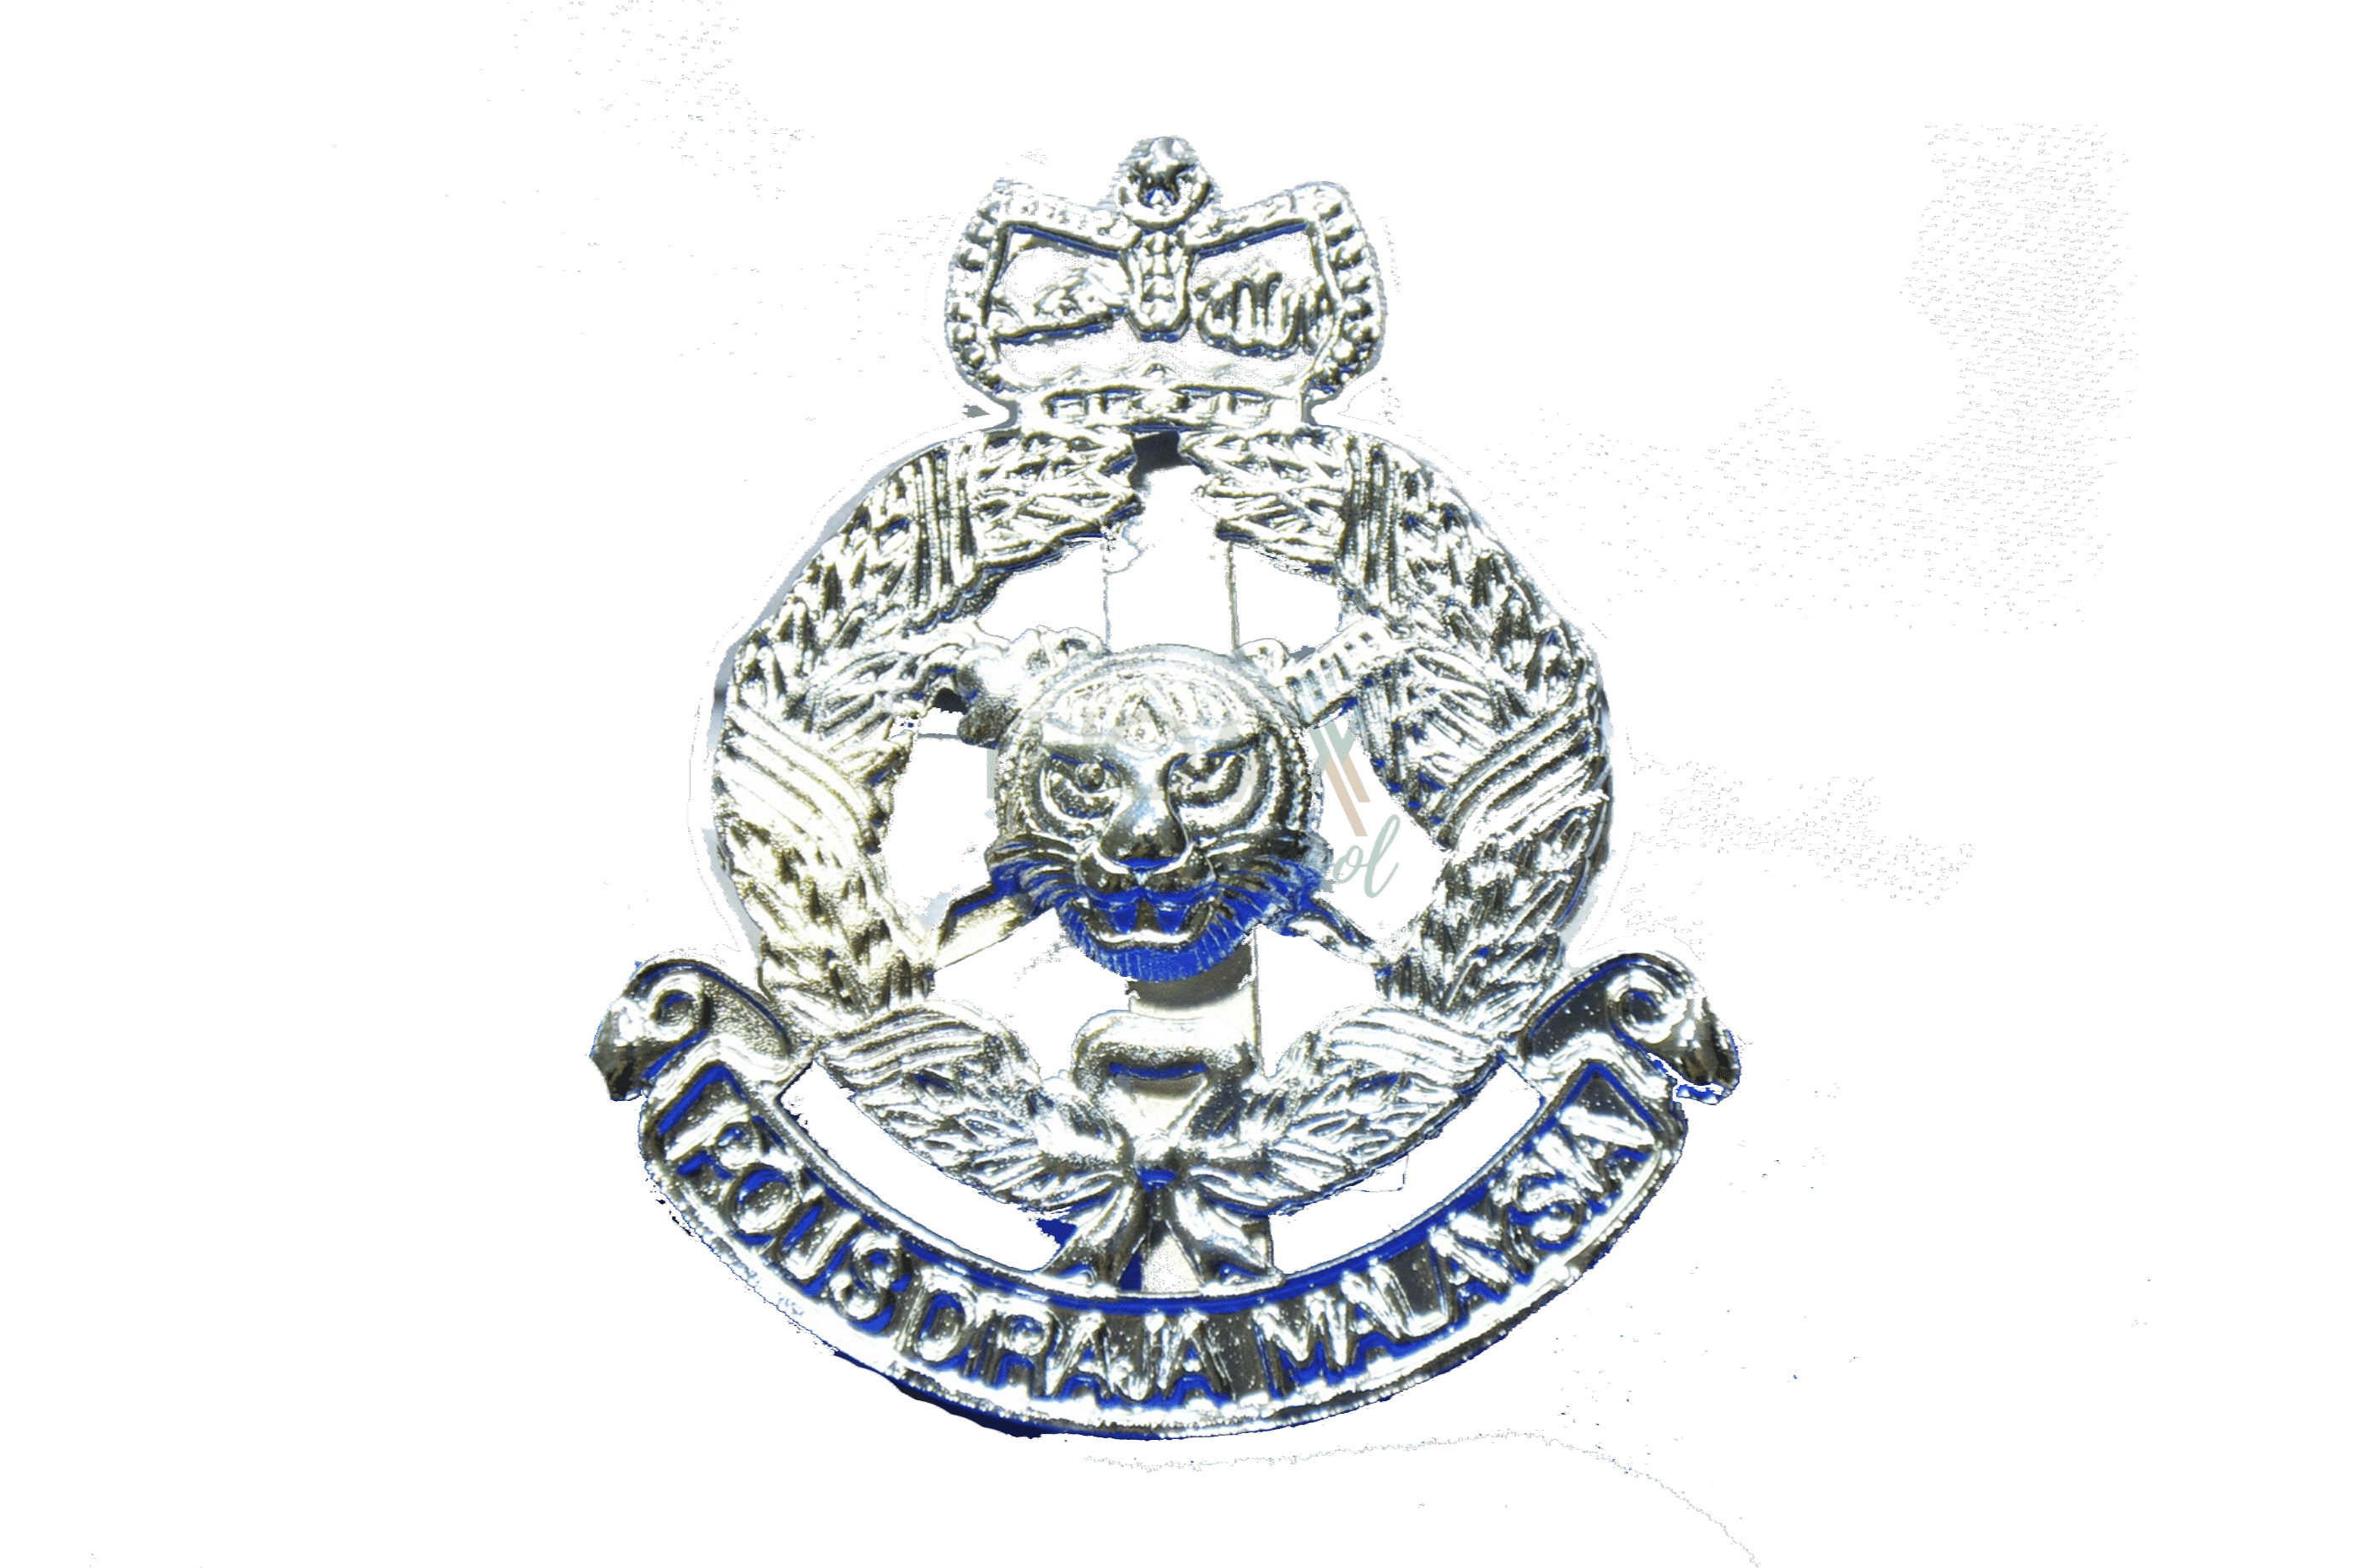 Kadet Polis Logo - Jovanictz